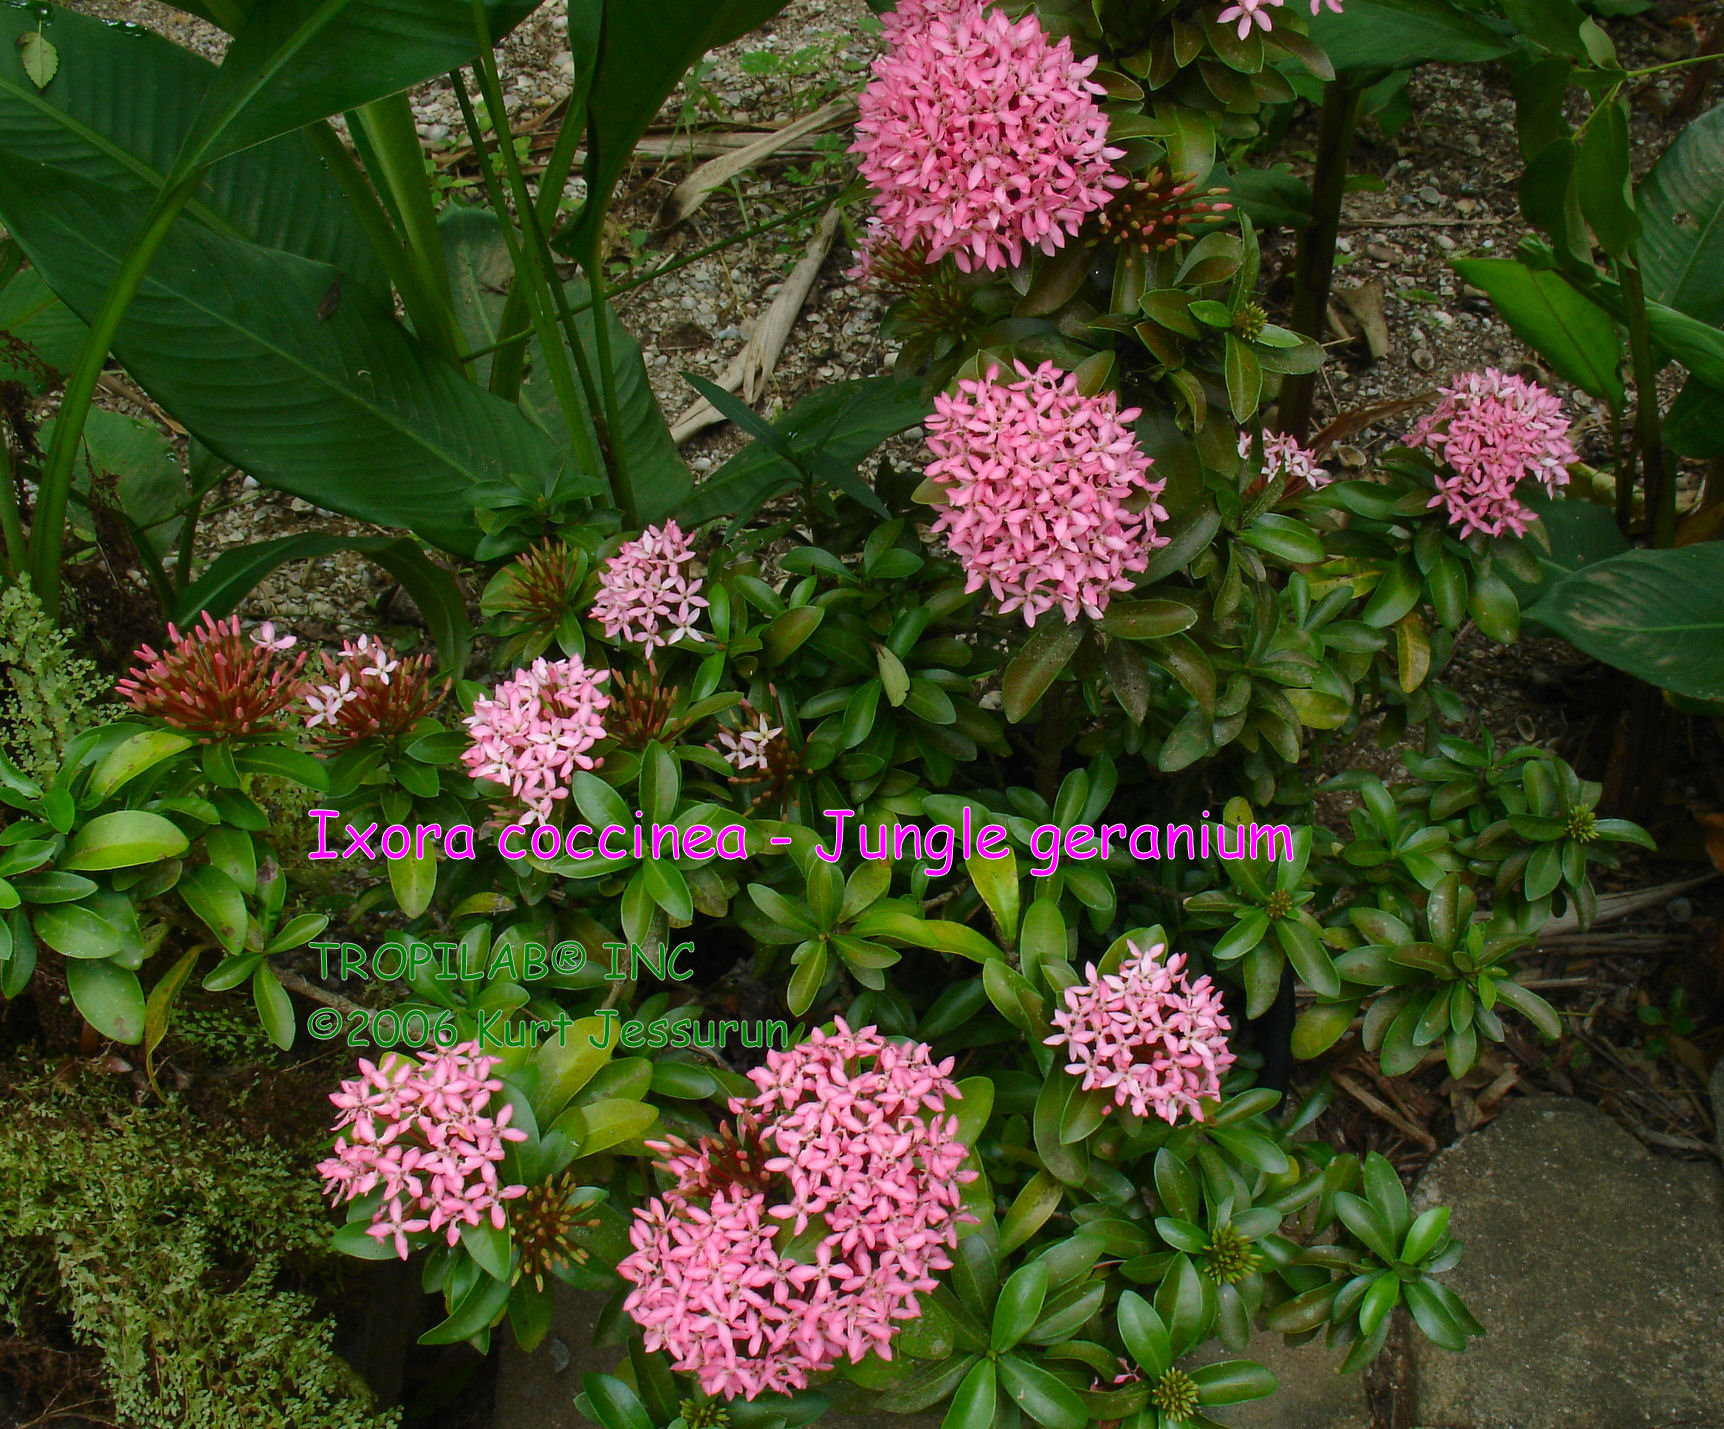 Ixora coccinea - Jungle geranium pink